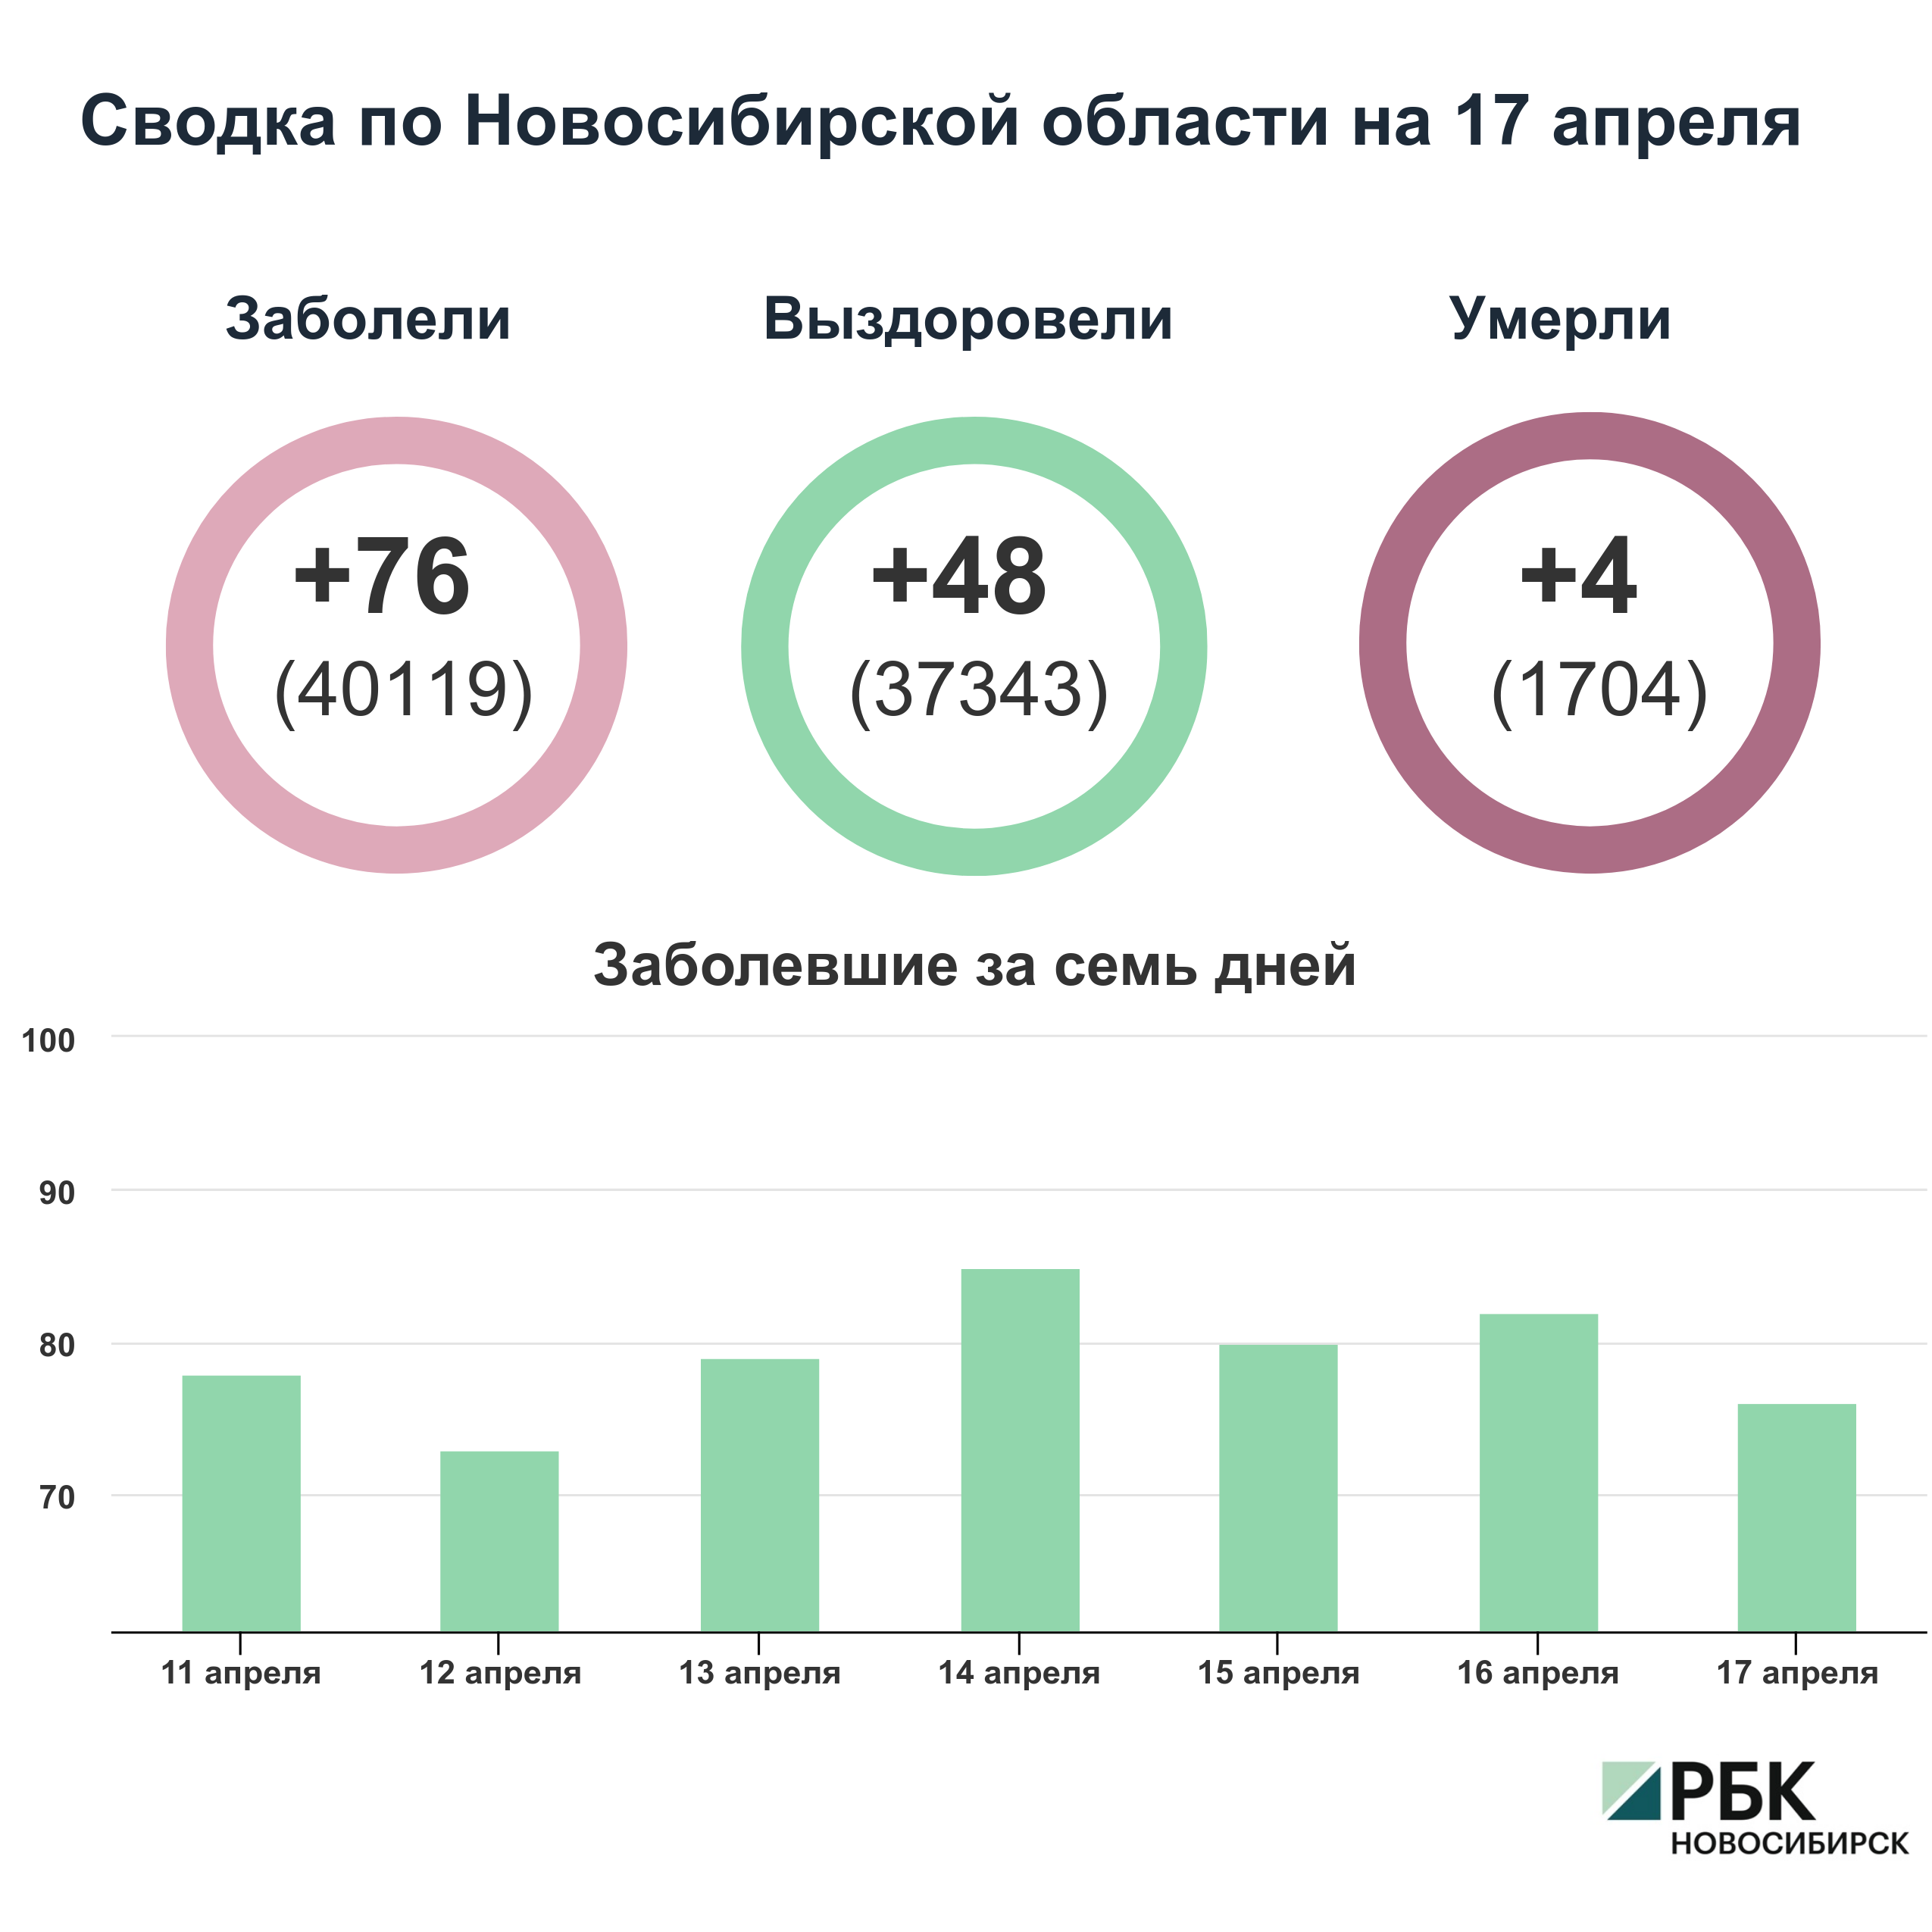 Коронавирус в Новосибирске: сводка на 17 апреля